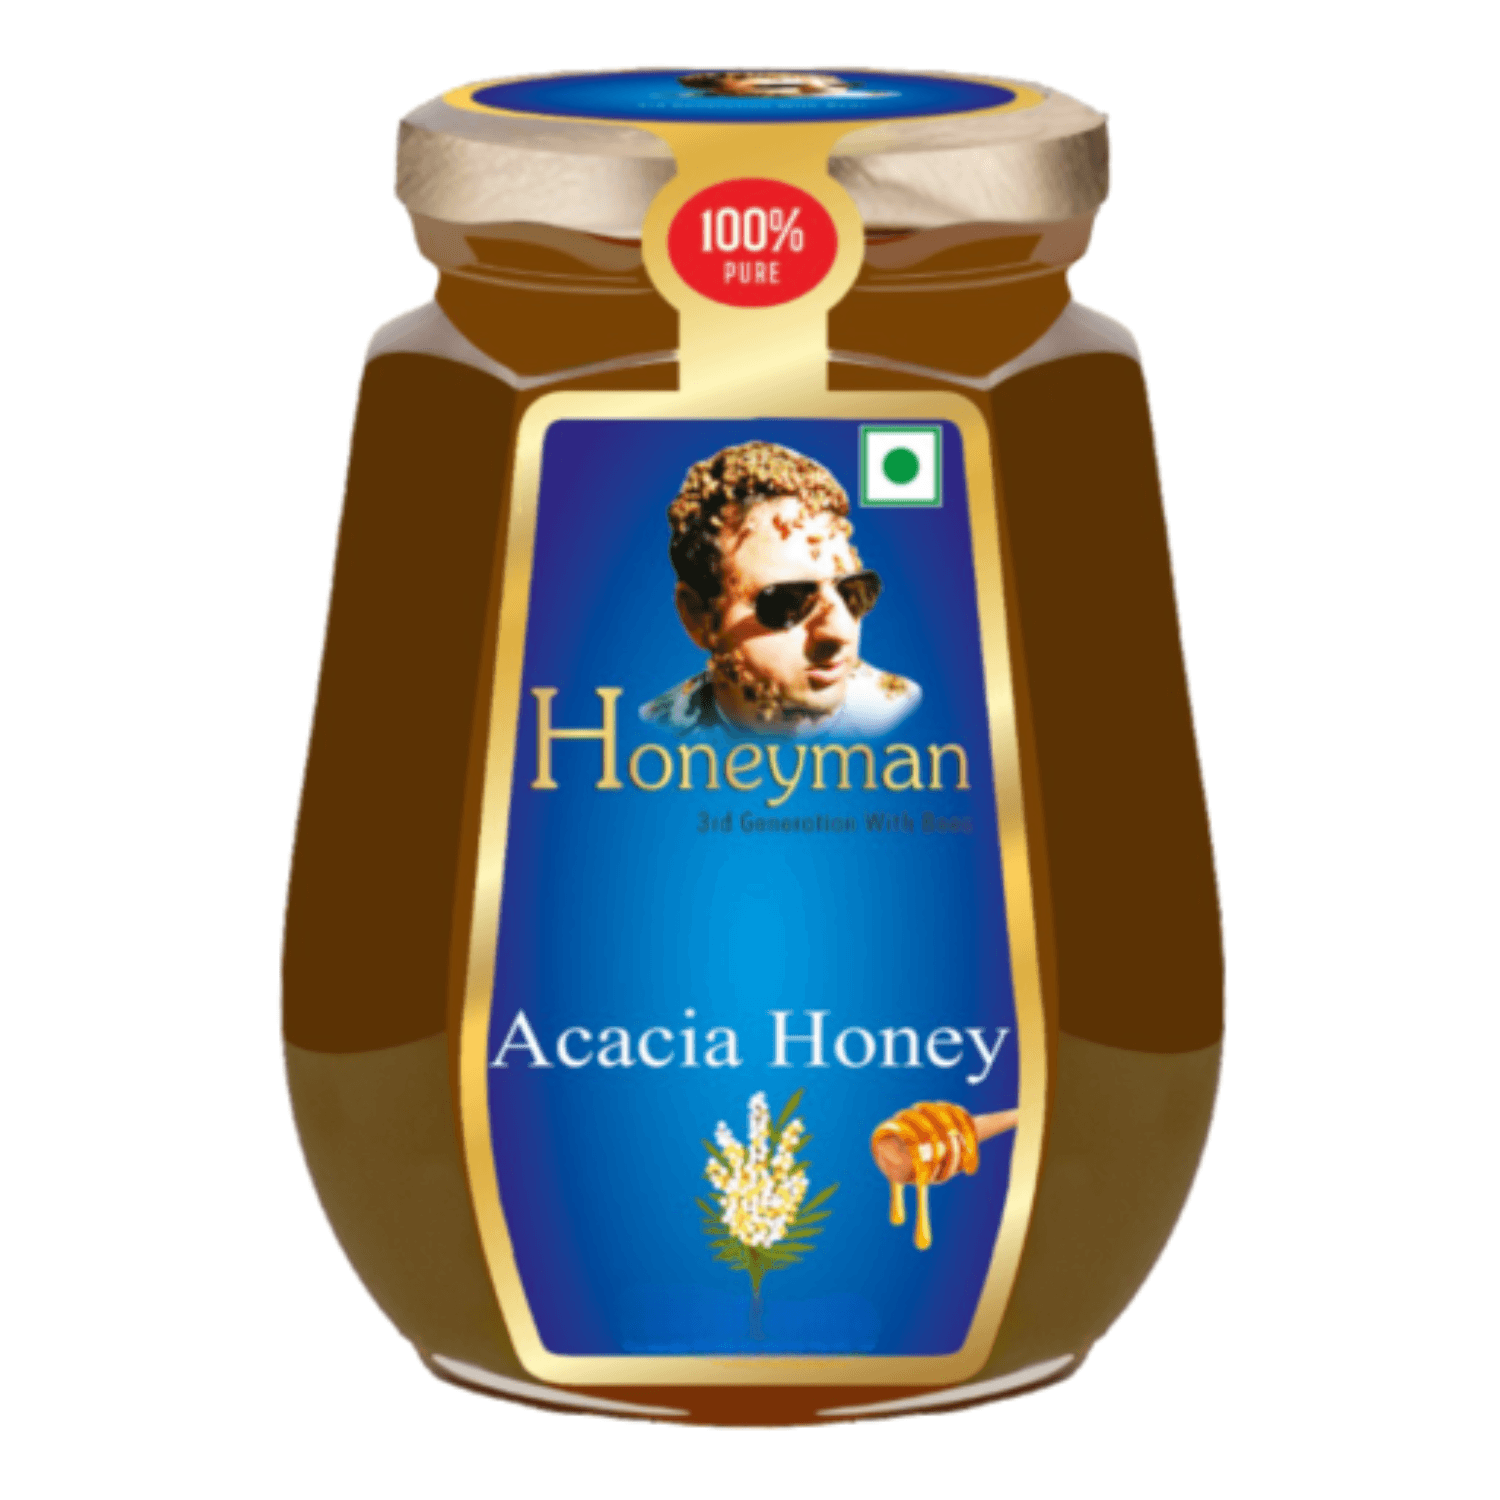 Honeyman Acacia Honey